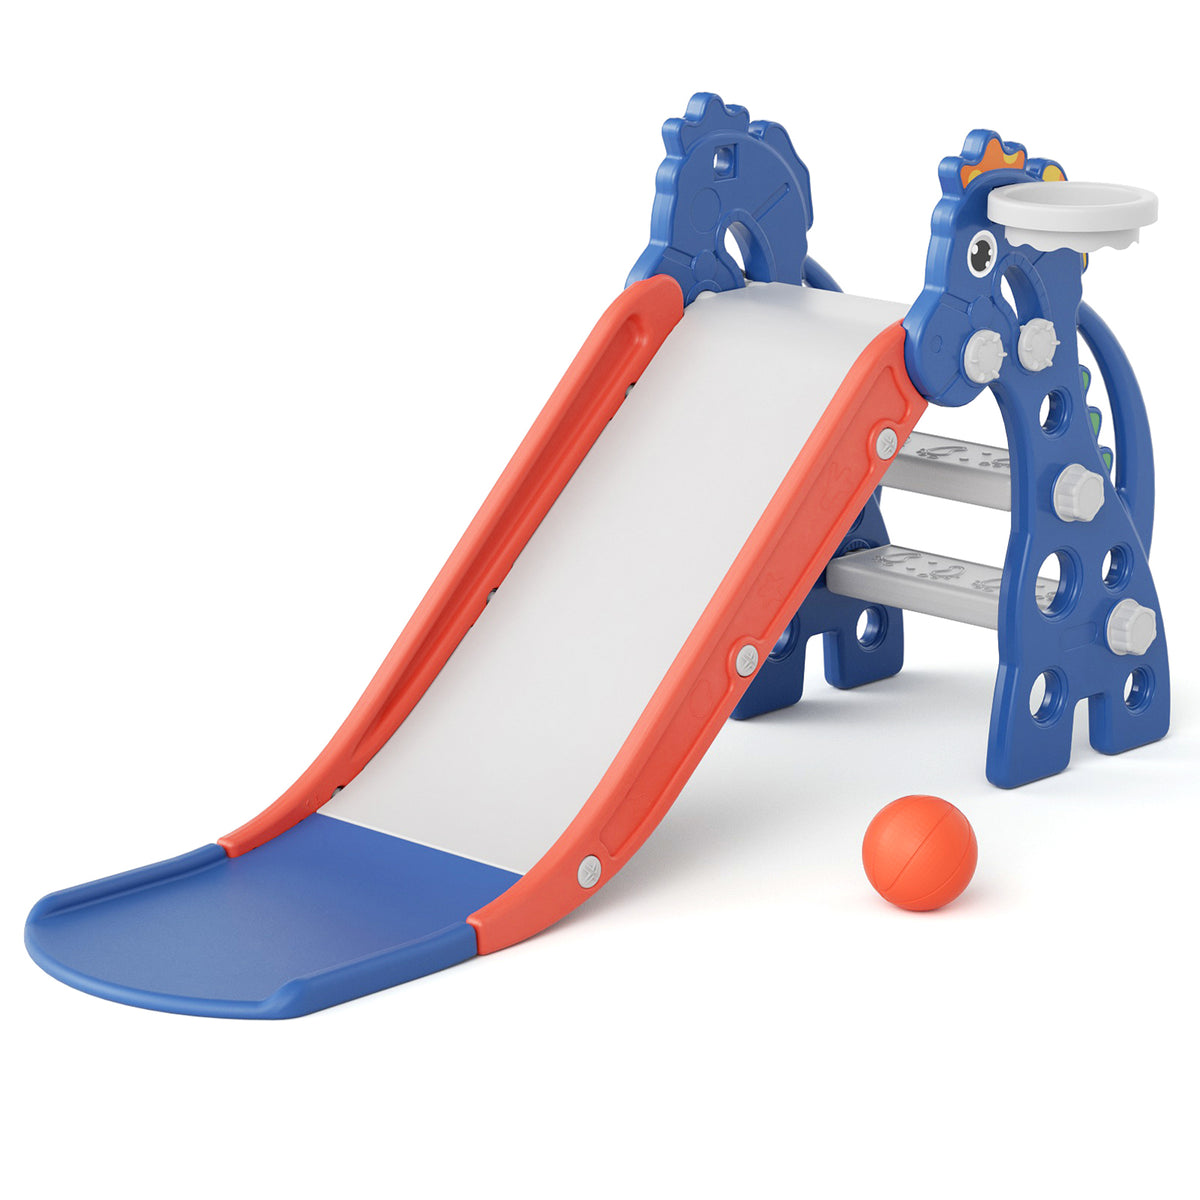 67i 3 in 1 Foldable Slide Set for Toddlers Age 1-3 Blue